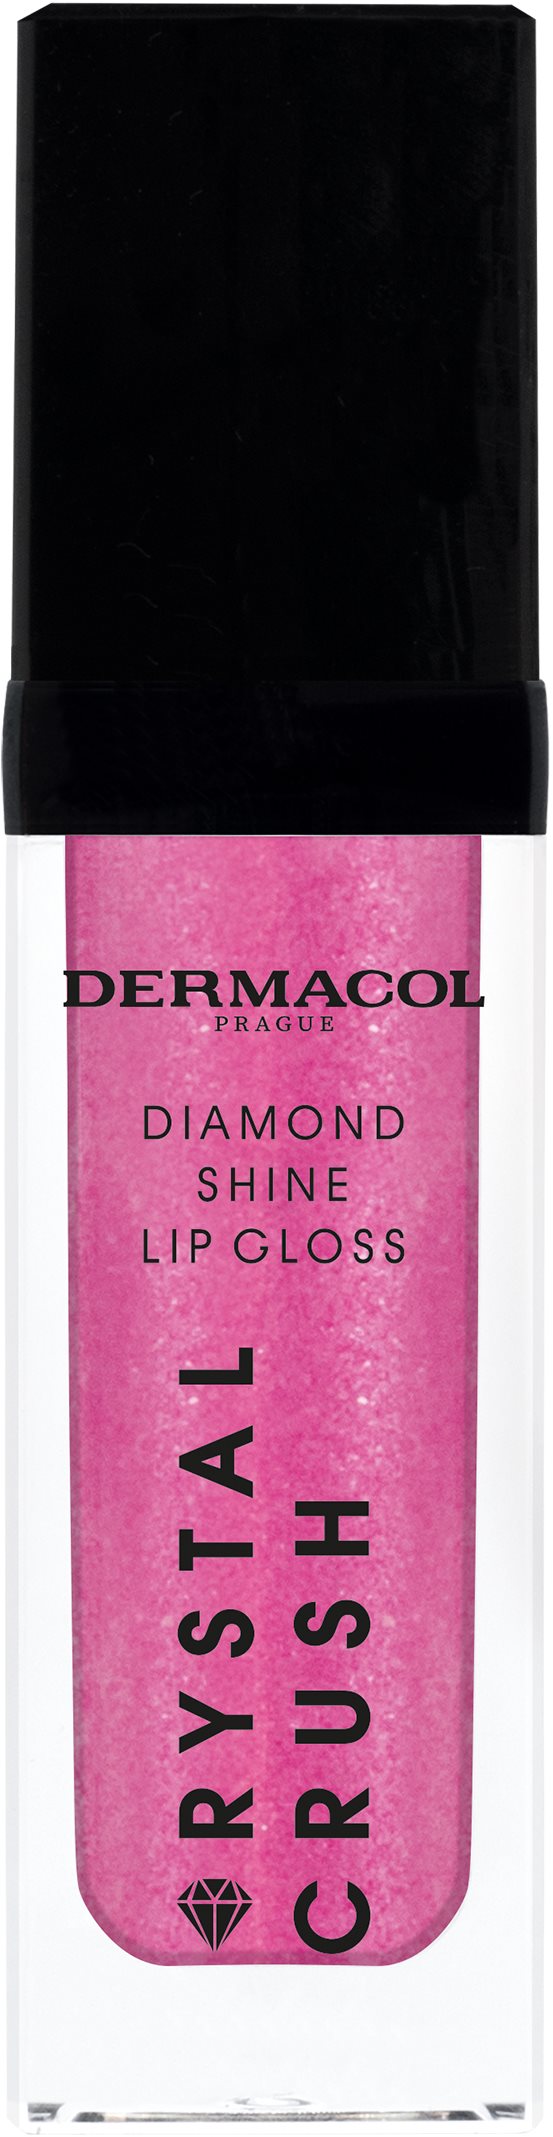 DERMACOL Crystal Crush Diamond Shine Lip Gloss No.02